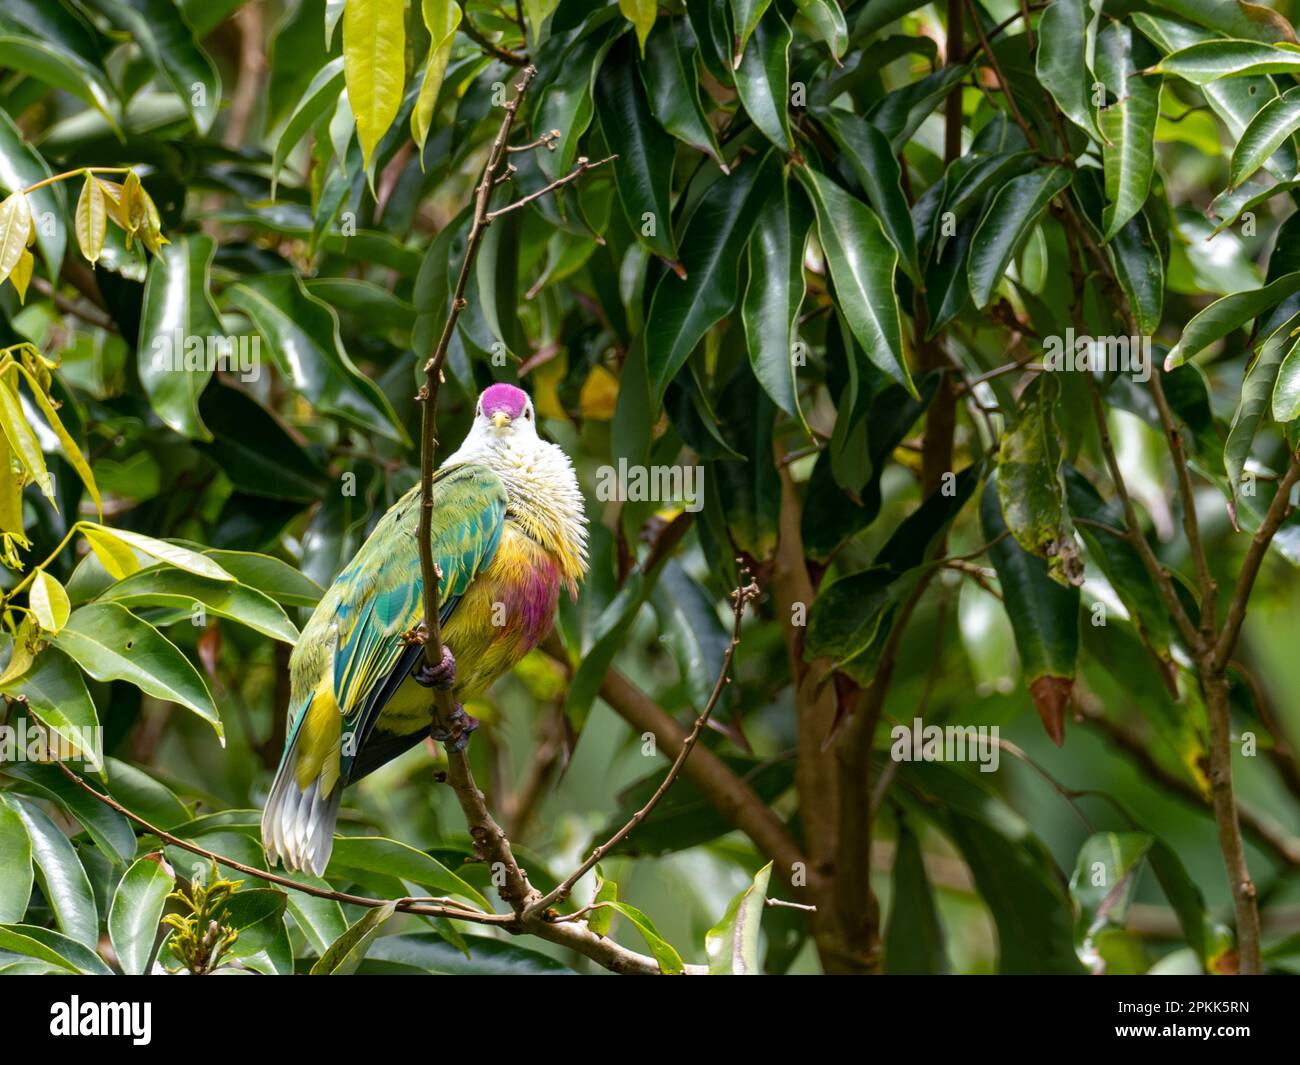 Cook islands Fruit-dove, Ptilinopus rarotongensis, a beautiful endemic bird found on the island of Rarotonga Stock Photo